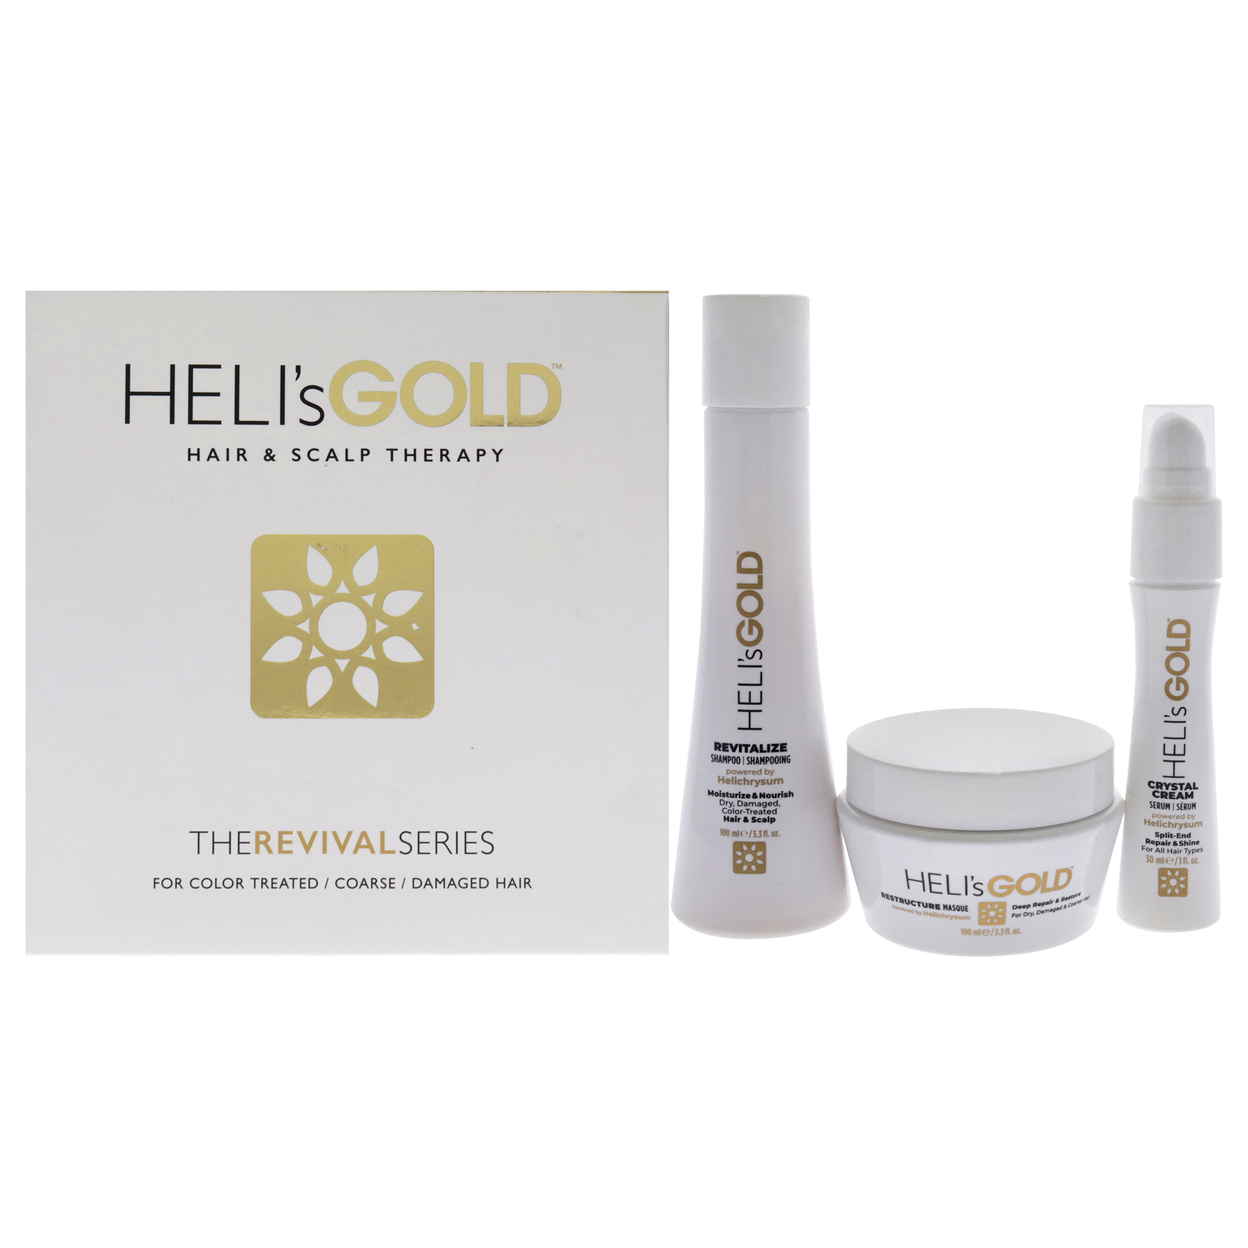 Helis Gold The Revival Series Travel Kit 3.3oz Revitalize Shampoo, 3.3oz Restructure Masque, 1oz Crystal Cream Serum 3 Pc